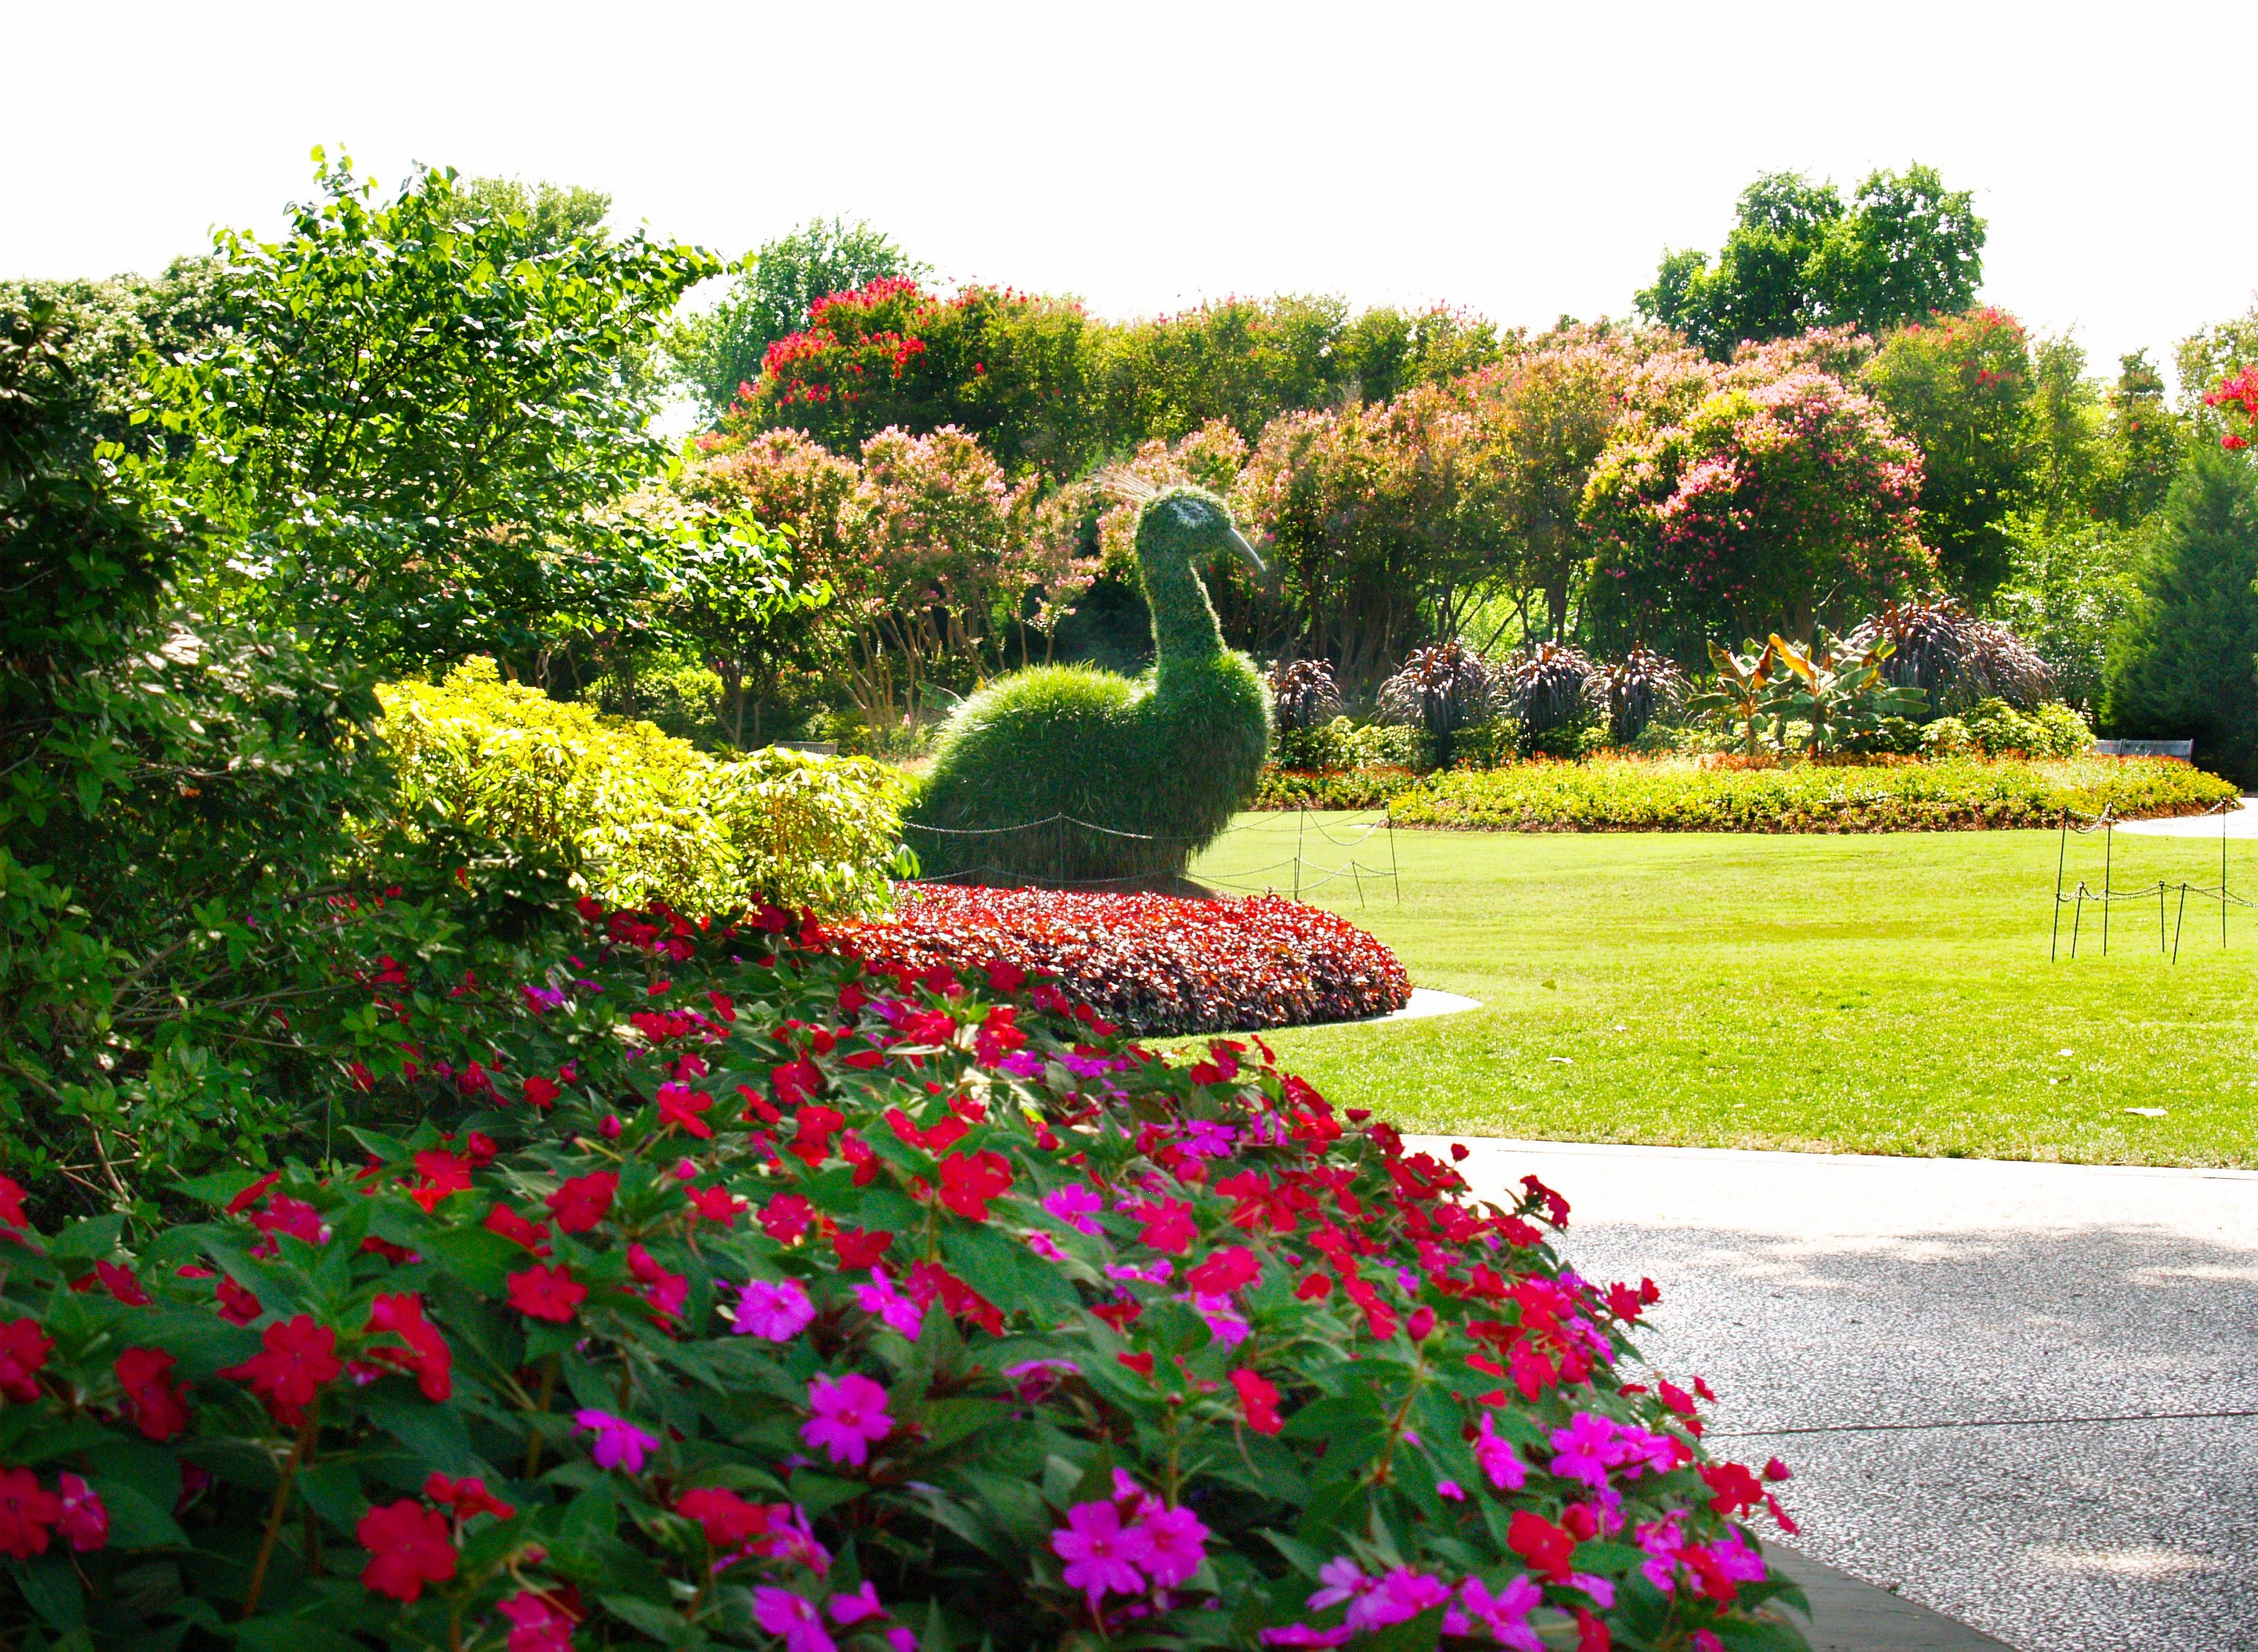 68 best Summer in the Garden images on Pinterest | Dallas arboretum ...